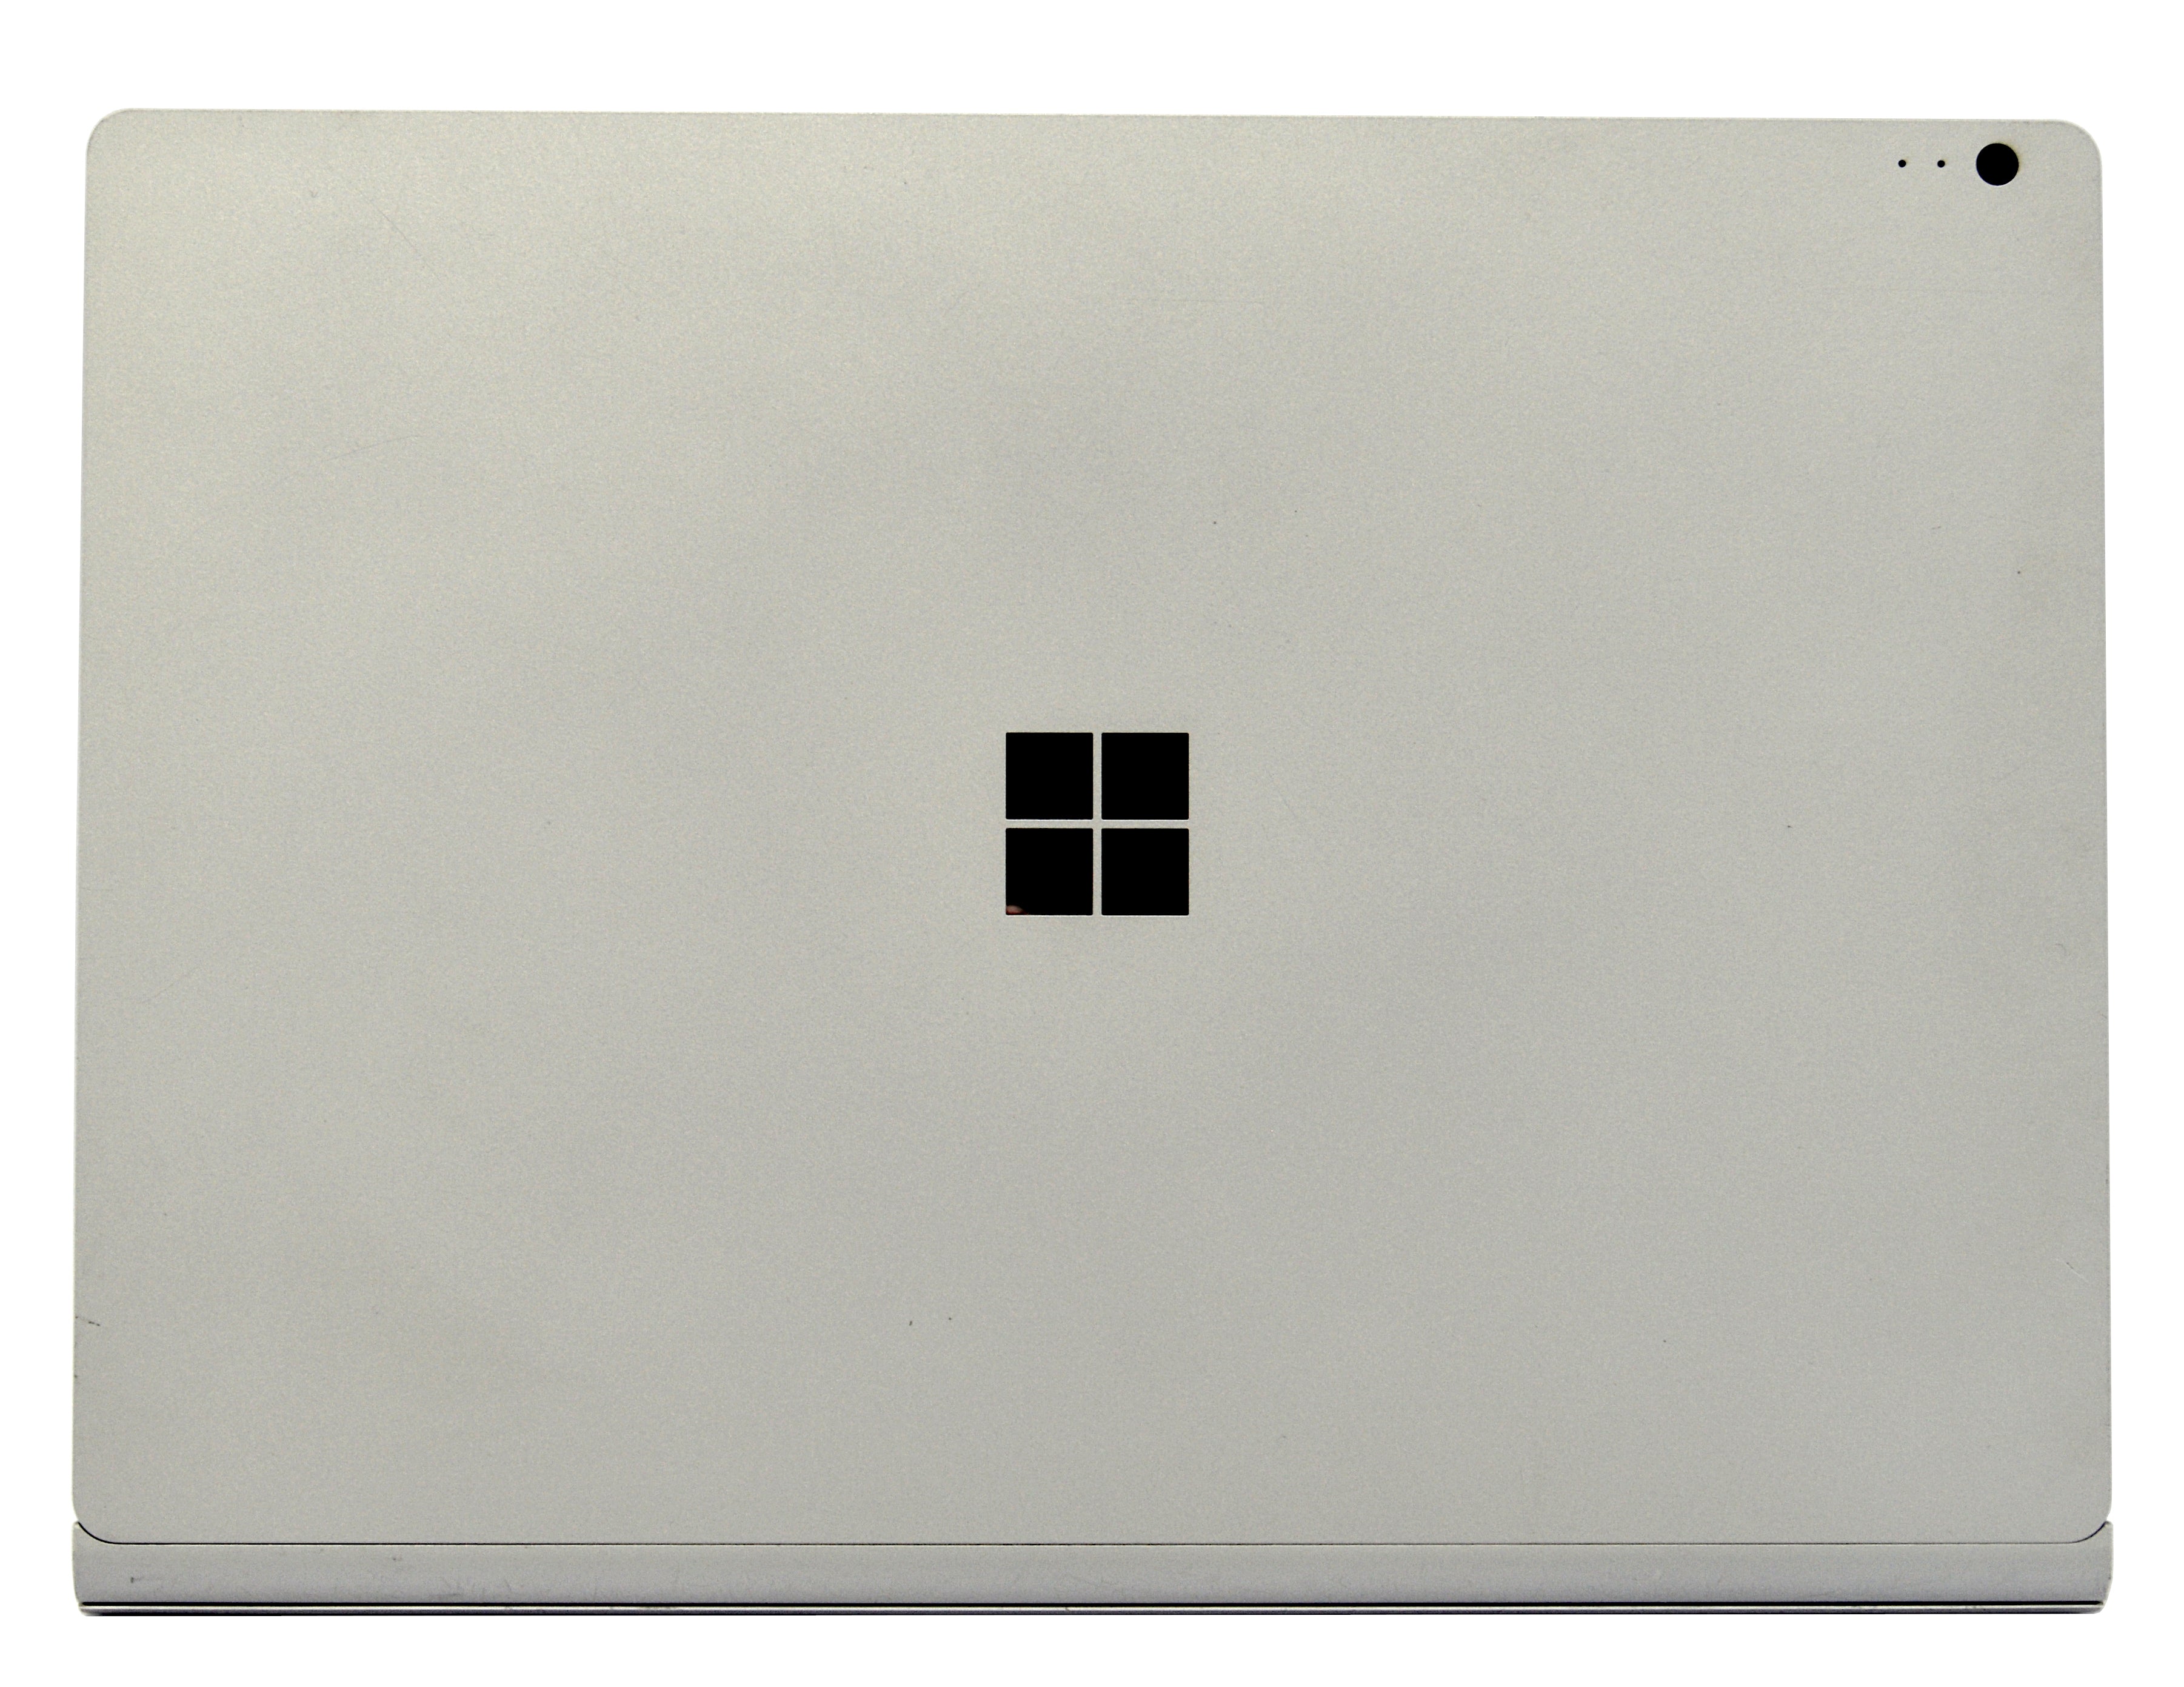 Microsoft Surface Book 2 Laptop, 13.5" i5 7th Gen, 8GB RAM, 256GB SSD